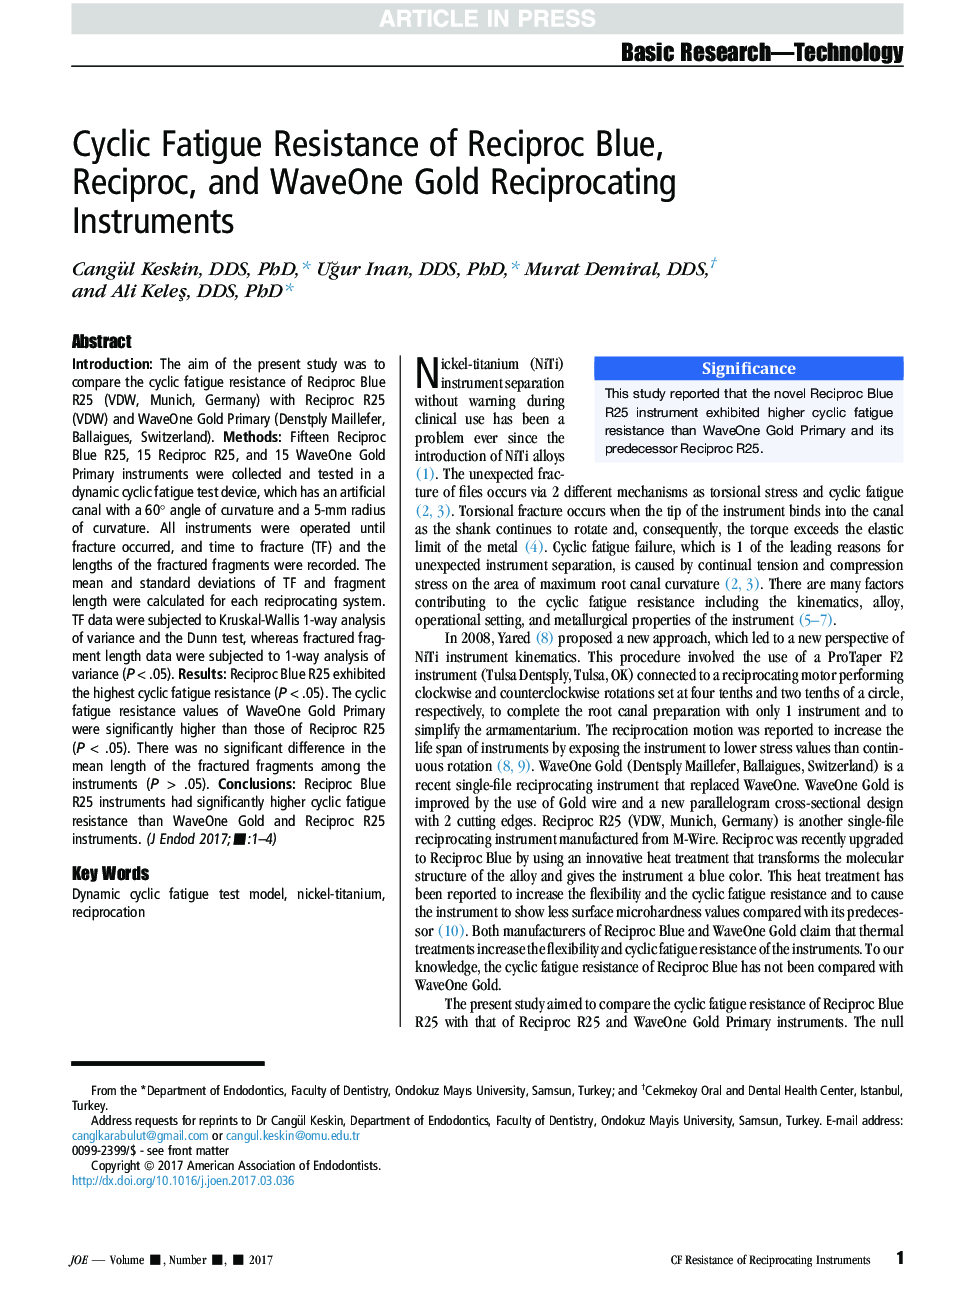 Cyclic Fatigue Resistance of Reciproc Blue, Reciproc, and WaveOne Gold Reciprocating Instruments